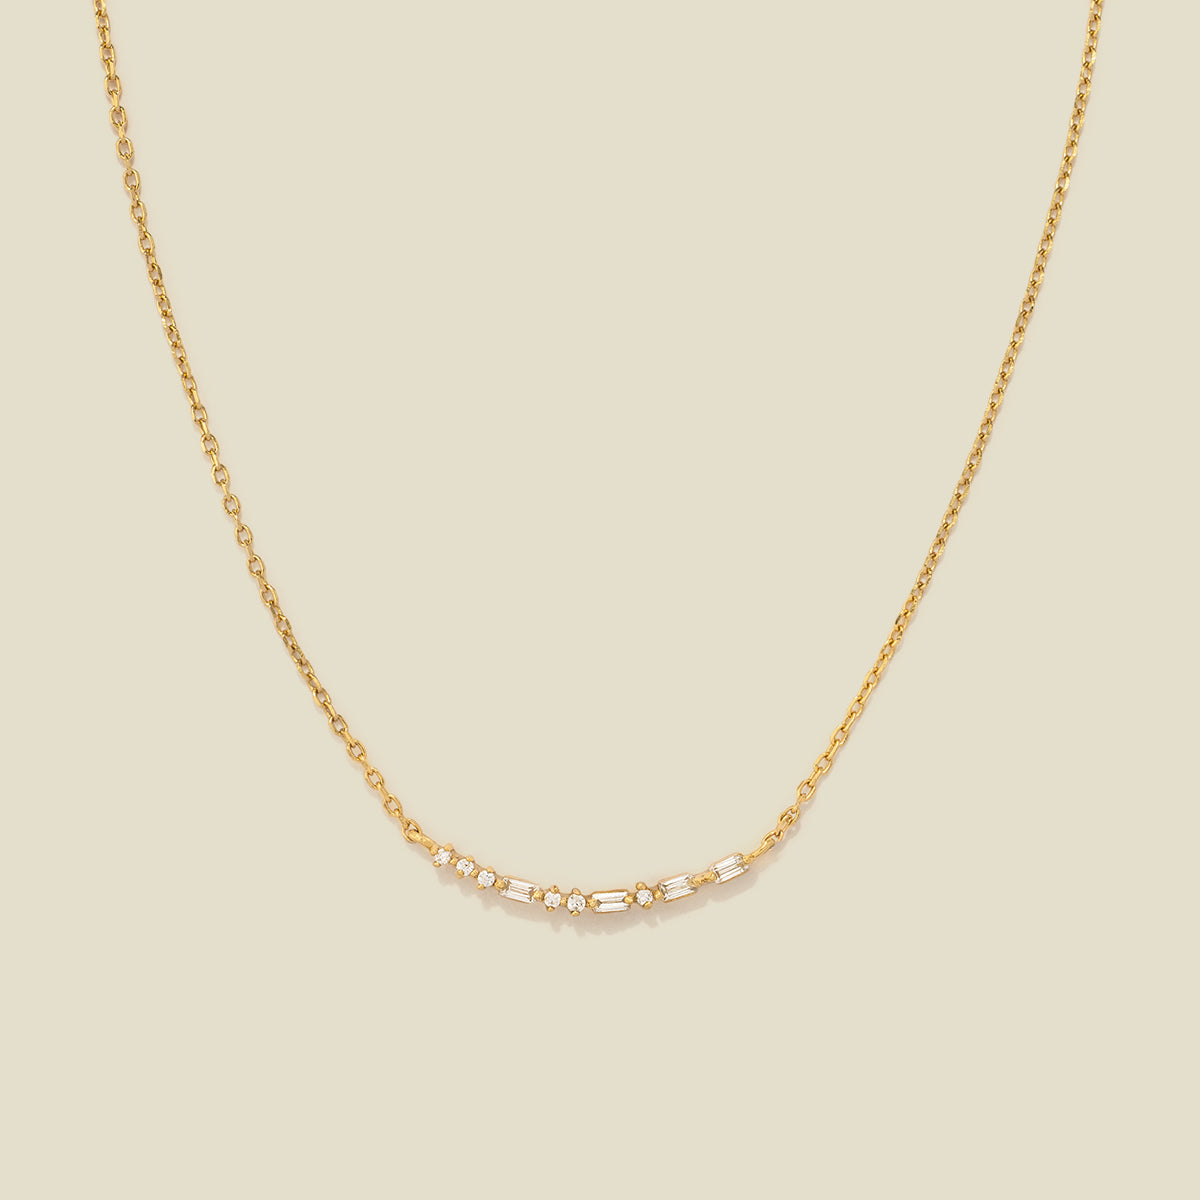 ILY Morse Code Necklace Gold Vermeil Necklace